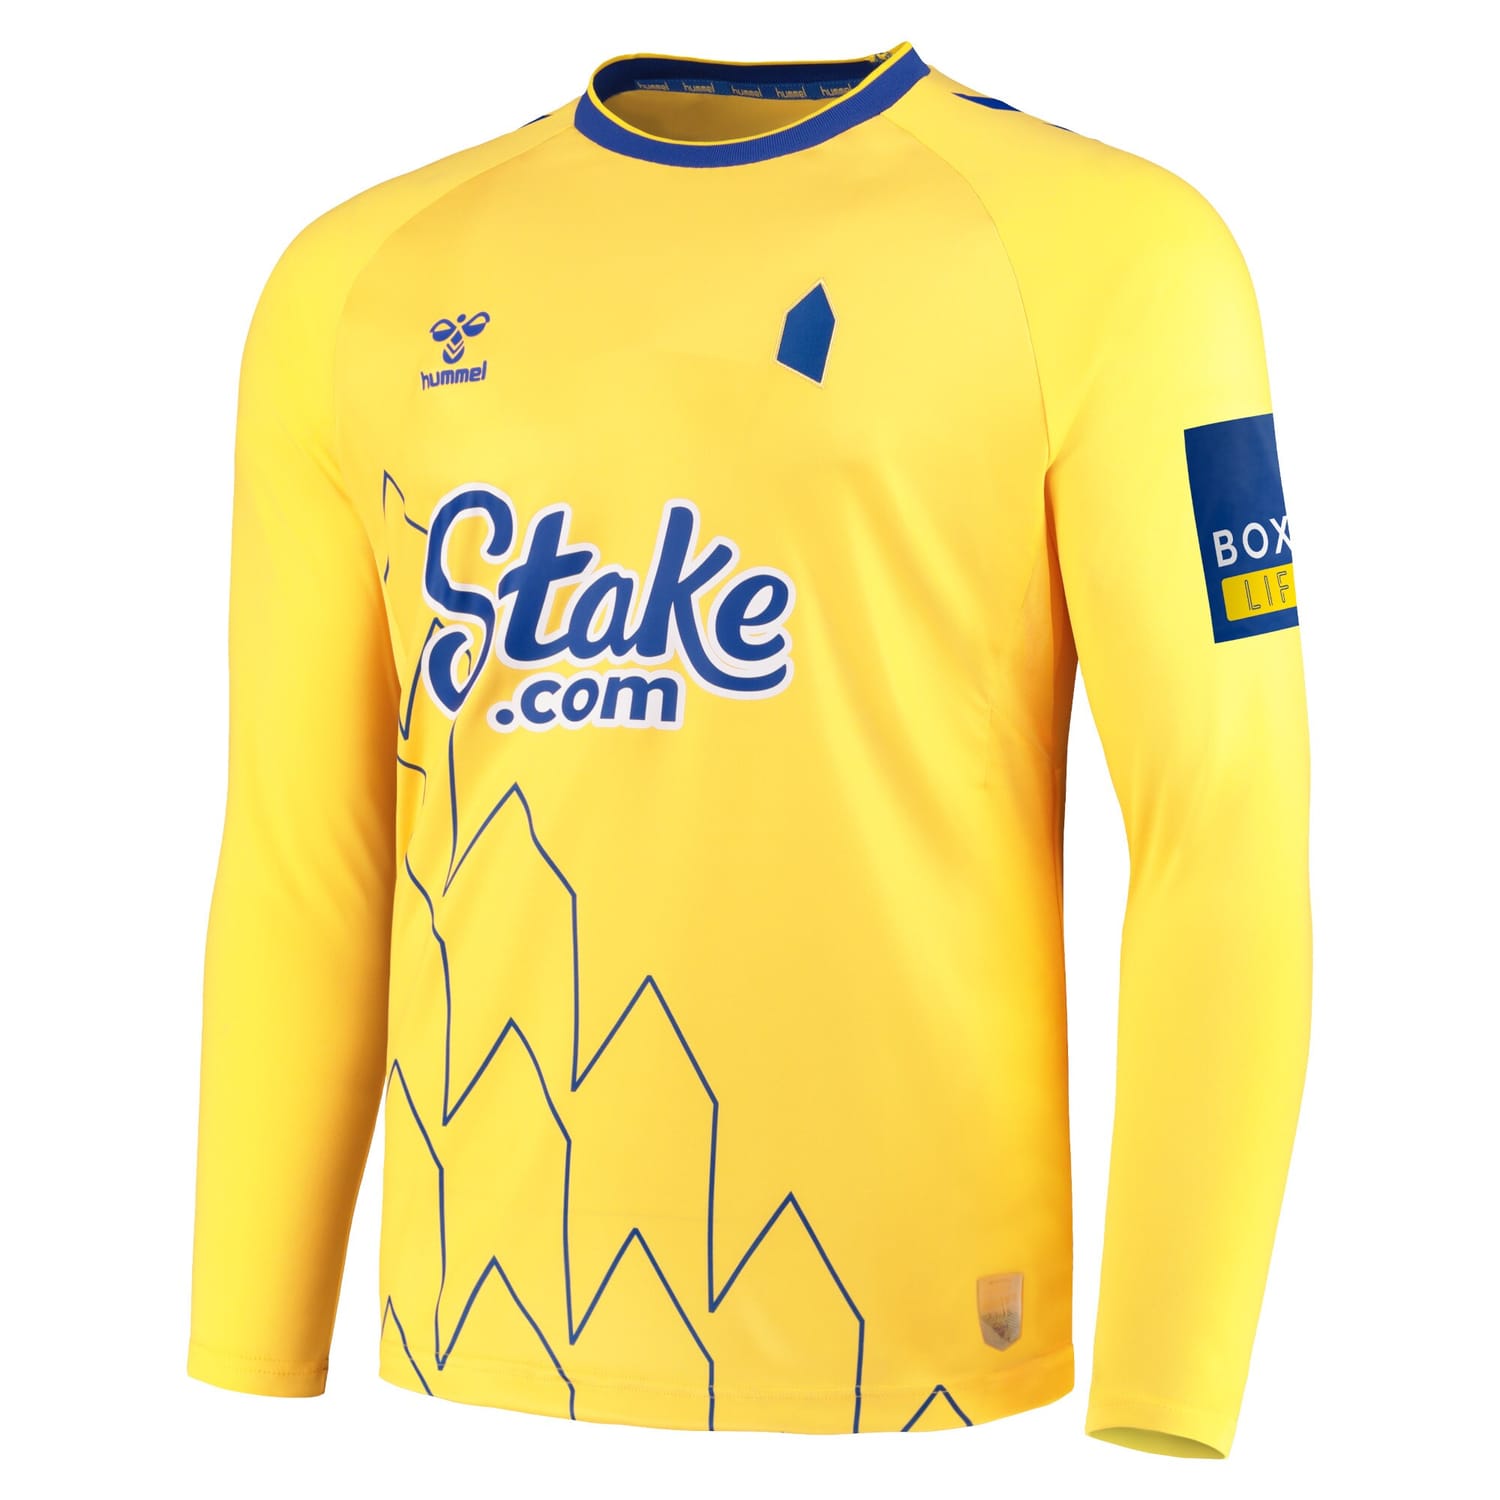 Premier League Everton Third WSL Jersey Shirt Long Sleeve 2022-23 player Karen Holmgaard 28 printing for Men